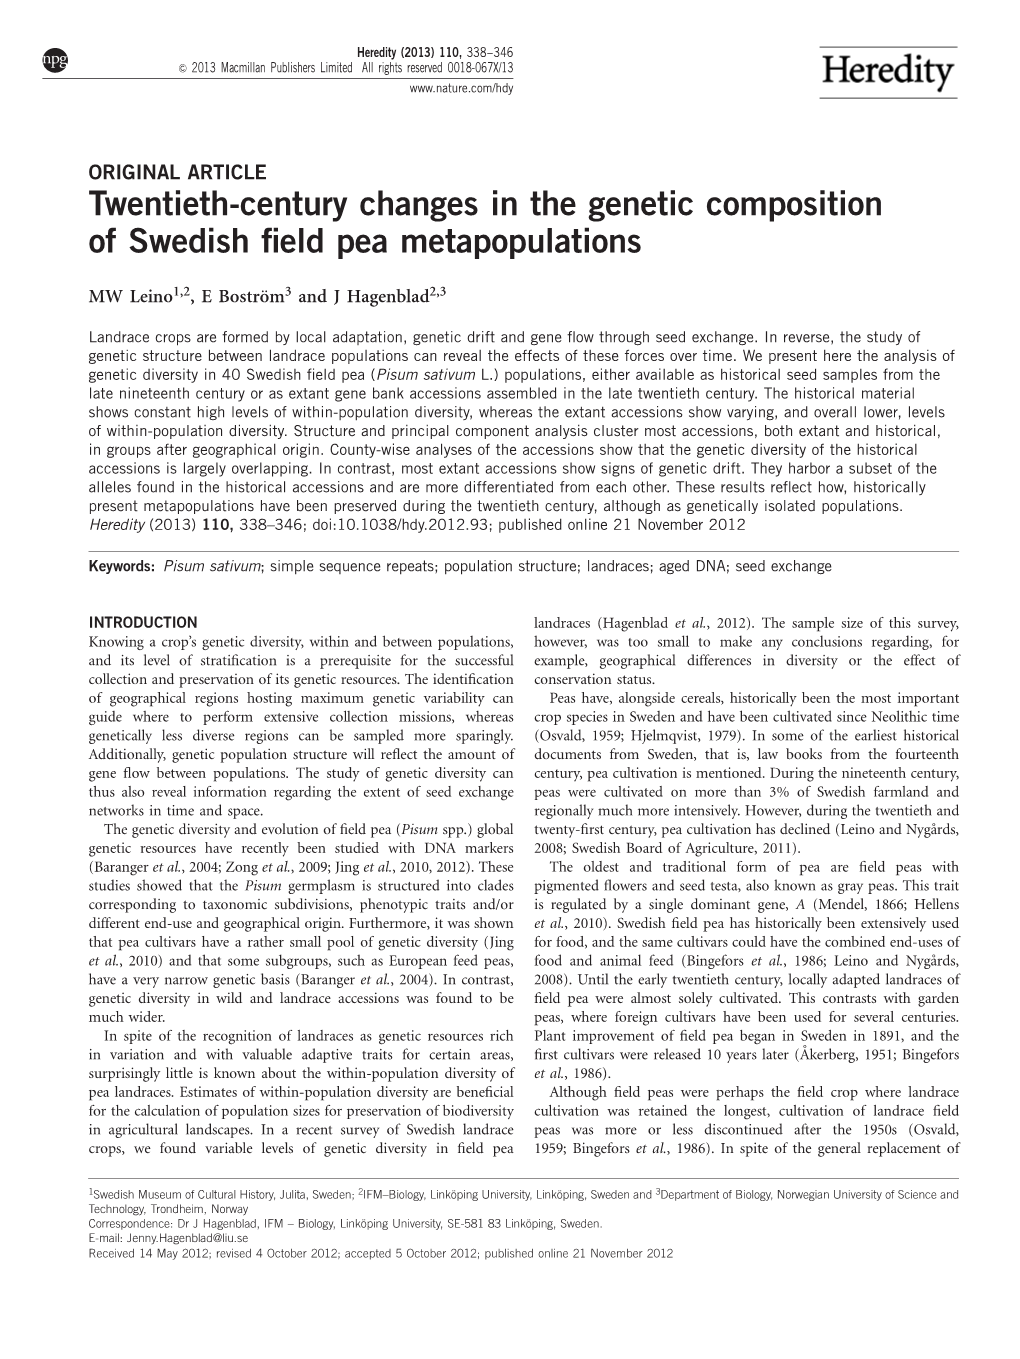 Twentieth-Century Changes in the Genetic Composition of Swedish ﬁeld Pea Metapopulations